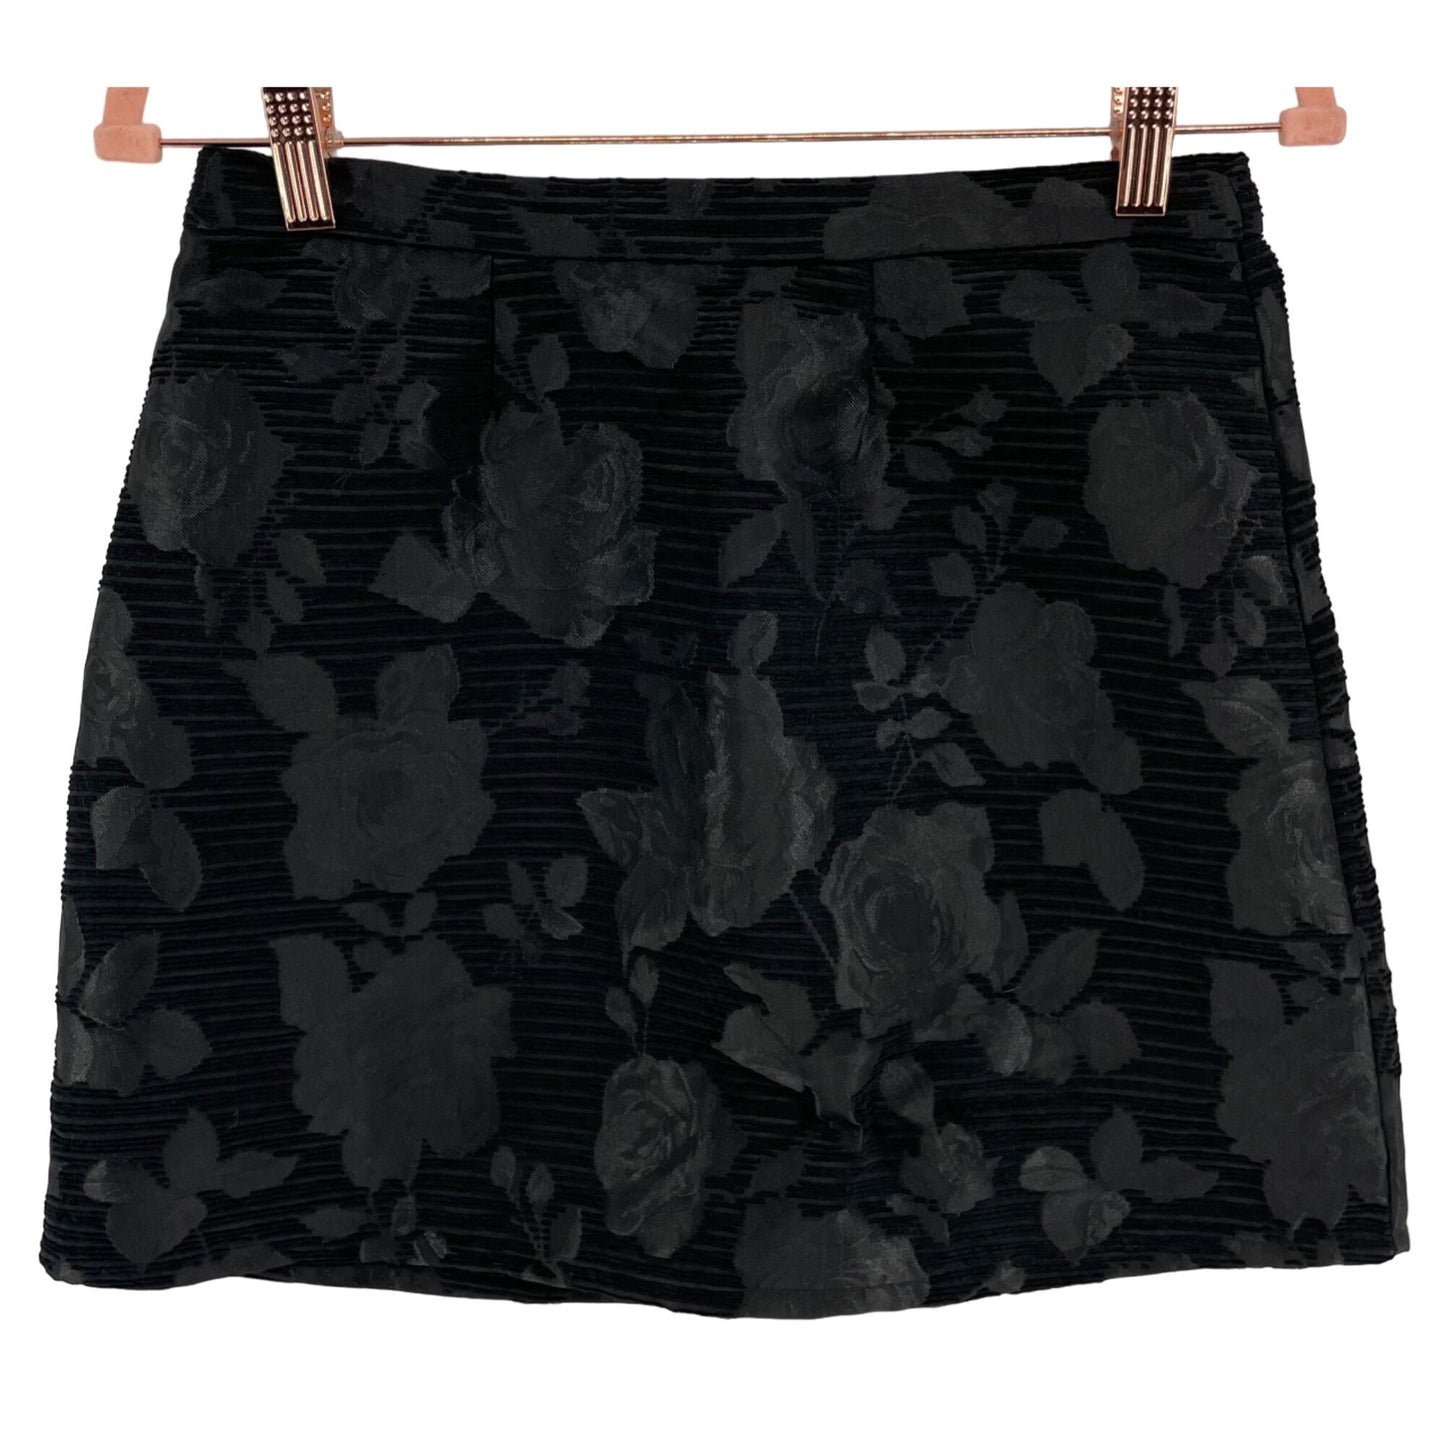 Forever 21 Women's Size Medium Black Lace Floral Rose Print Mini Skirt